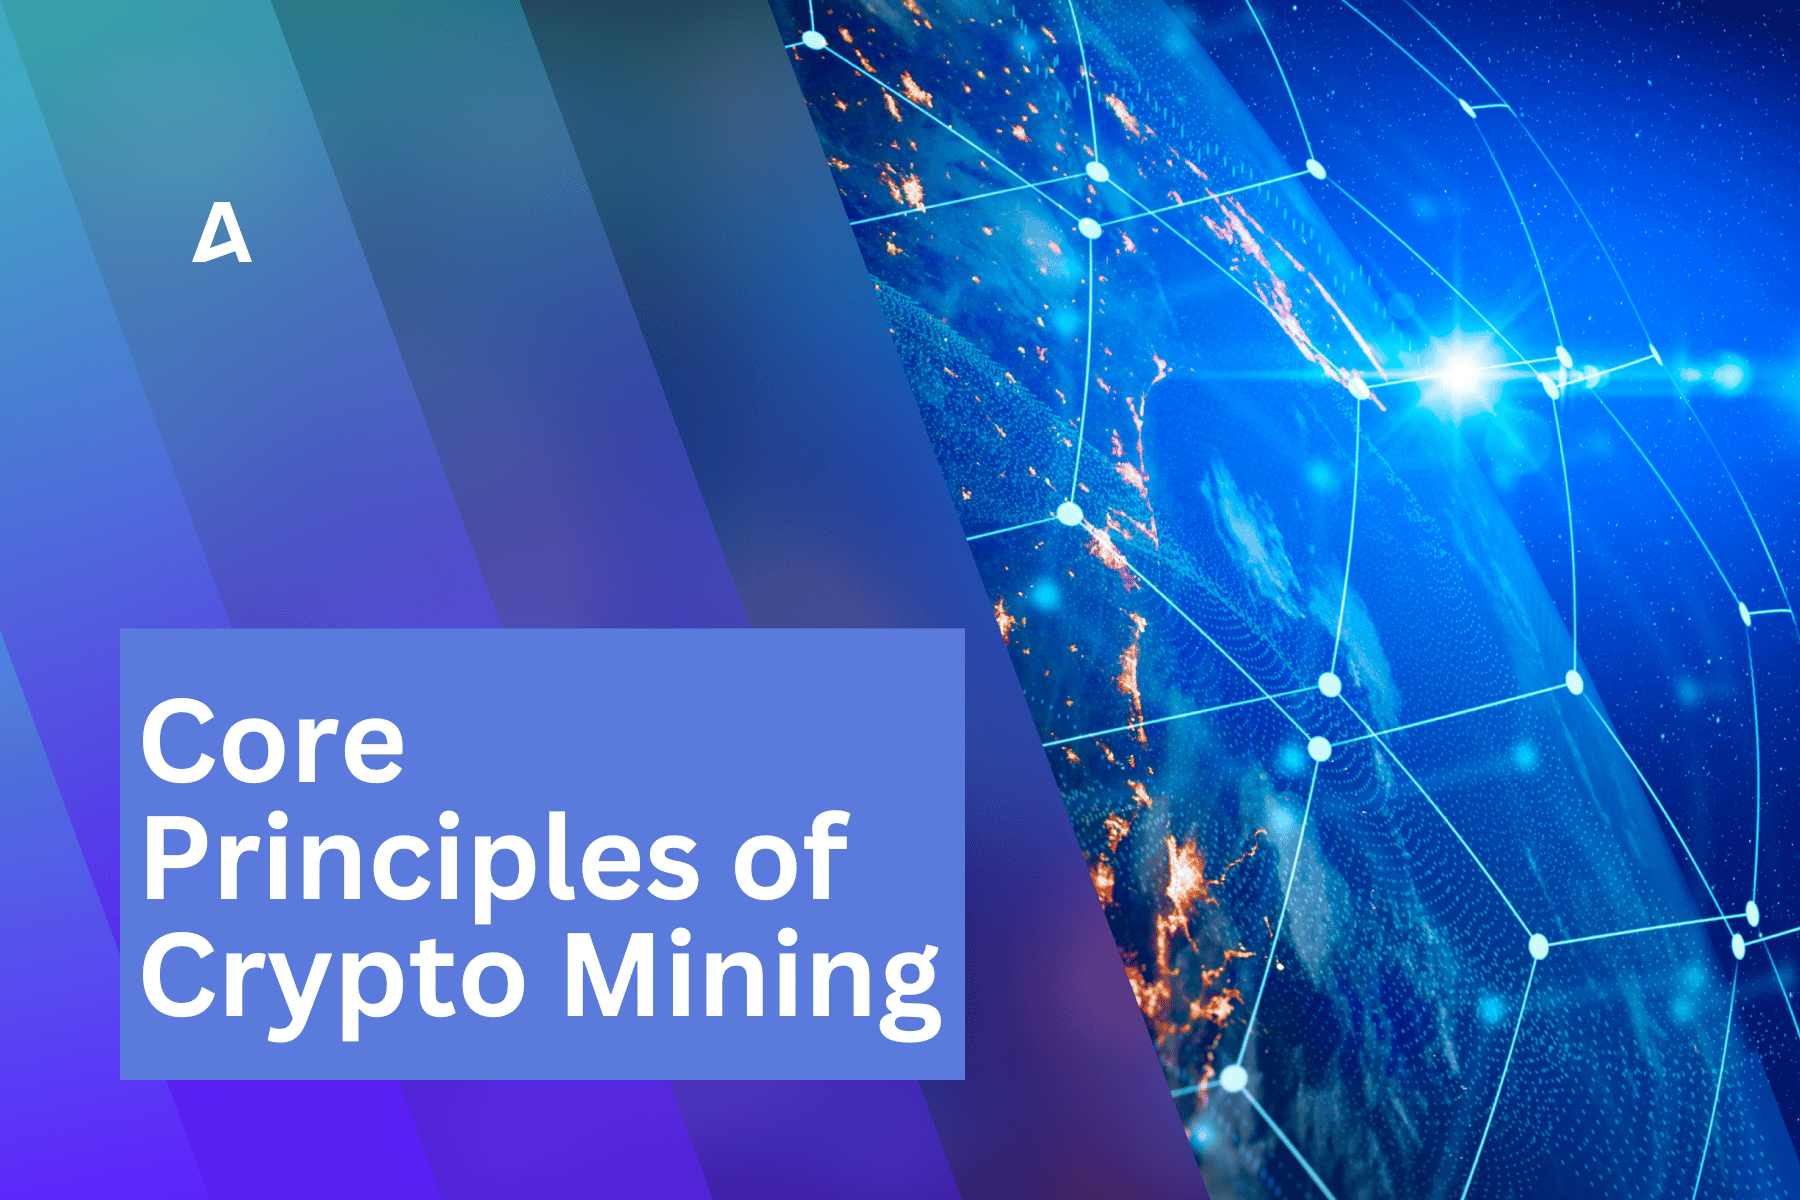 Core Principles of Crypto Mining